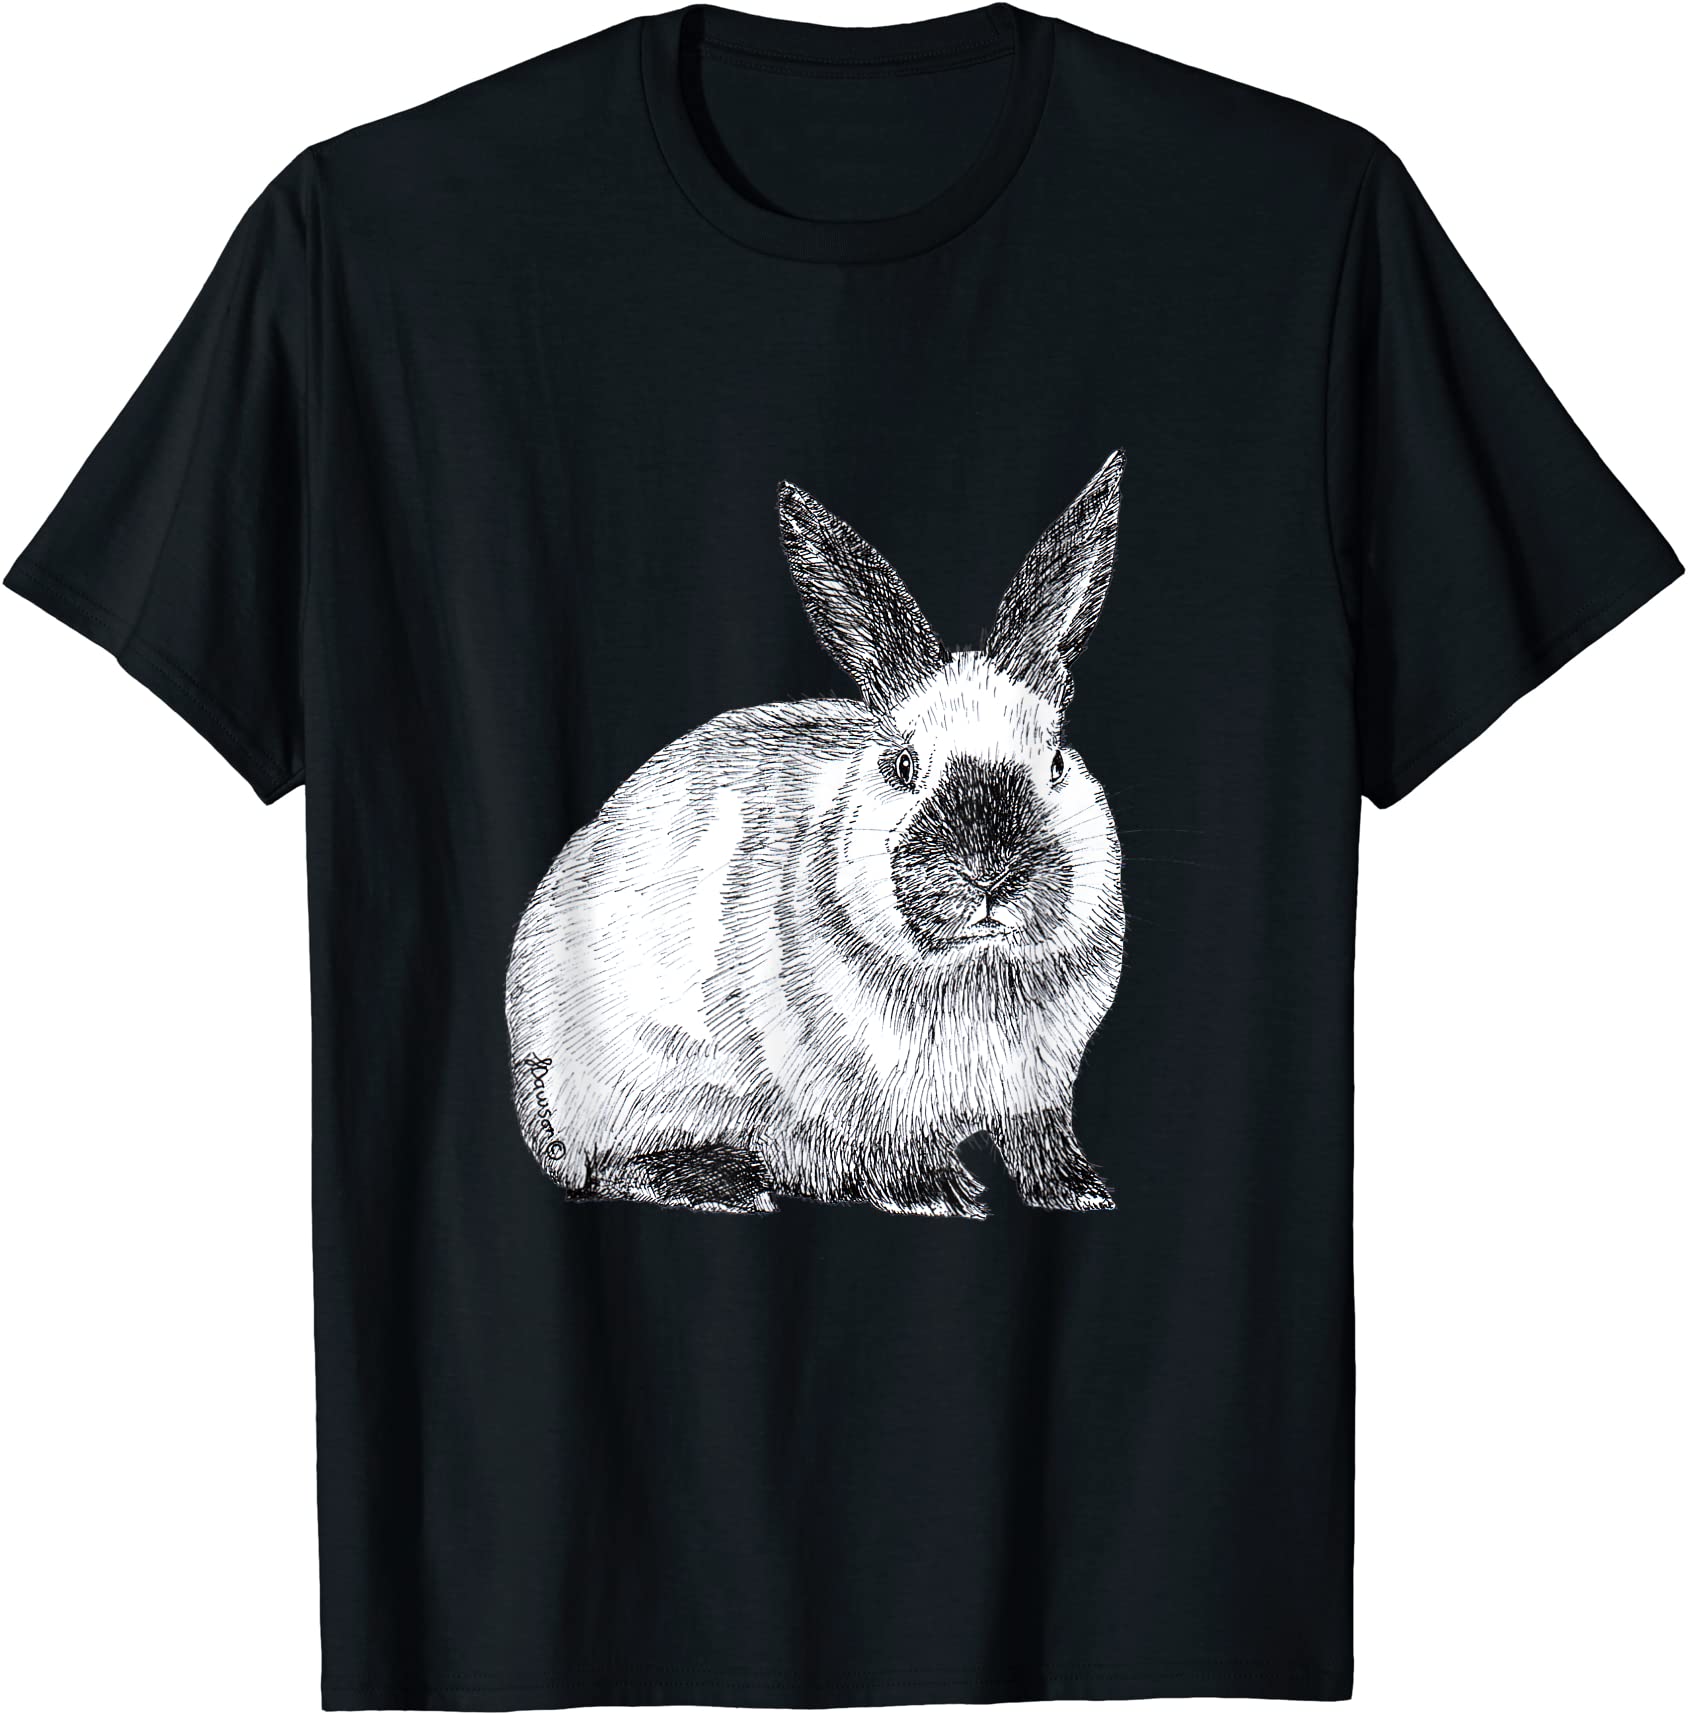 cute californian rex bunny rabbit drawing t shirt men - Buy t-shirt designs